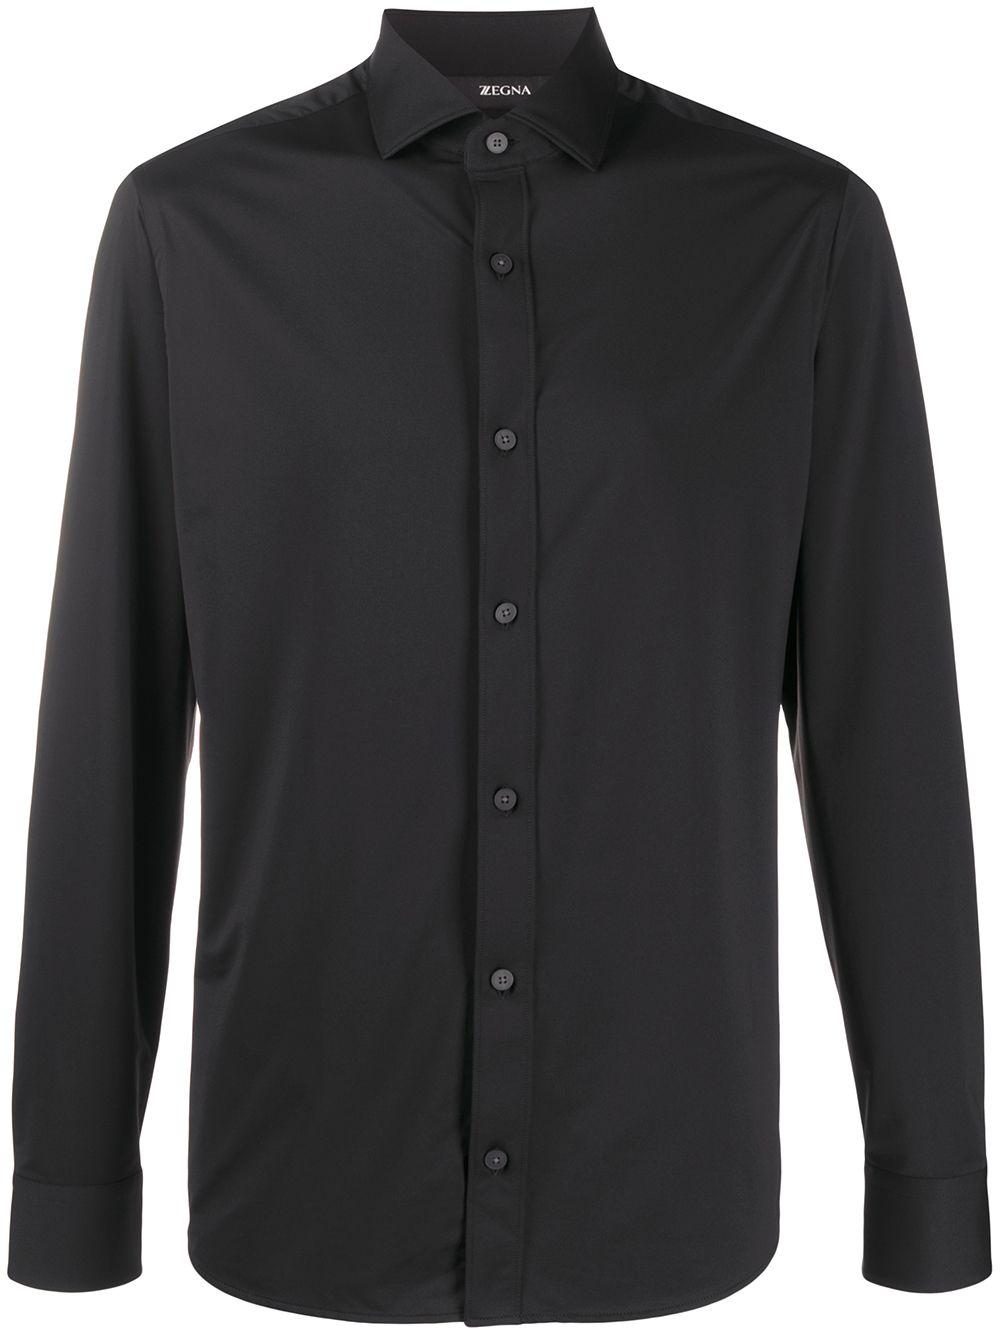 Z Zegna Cotton Classic Plain Shirt in Black for Men - Save 61% - Lyst